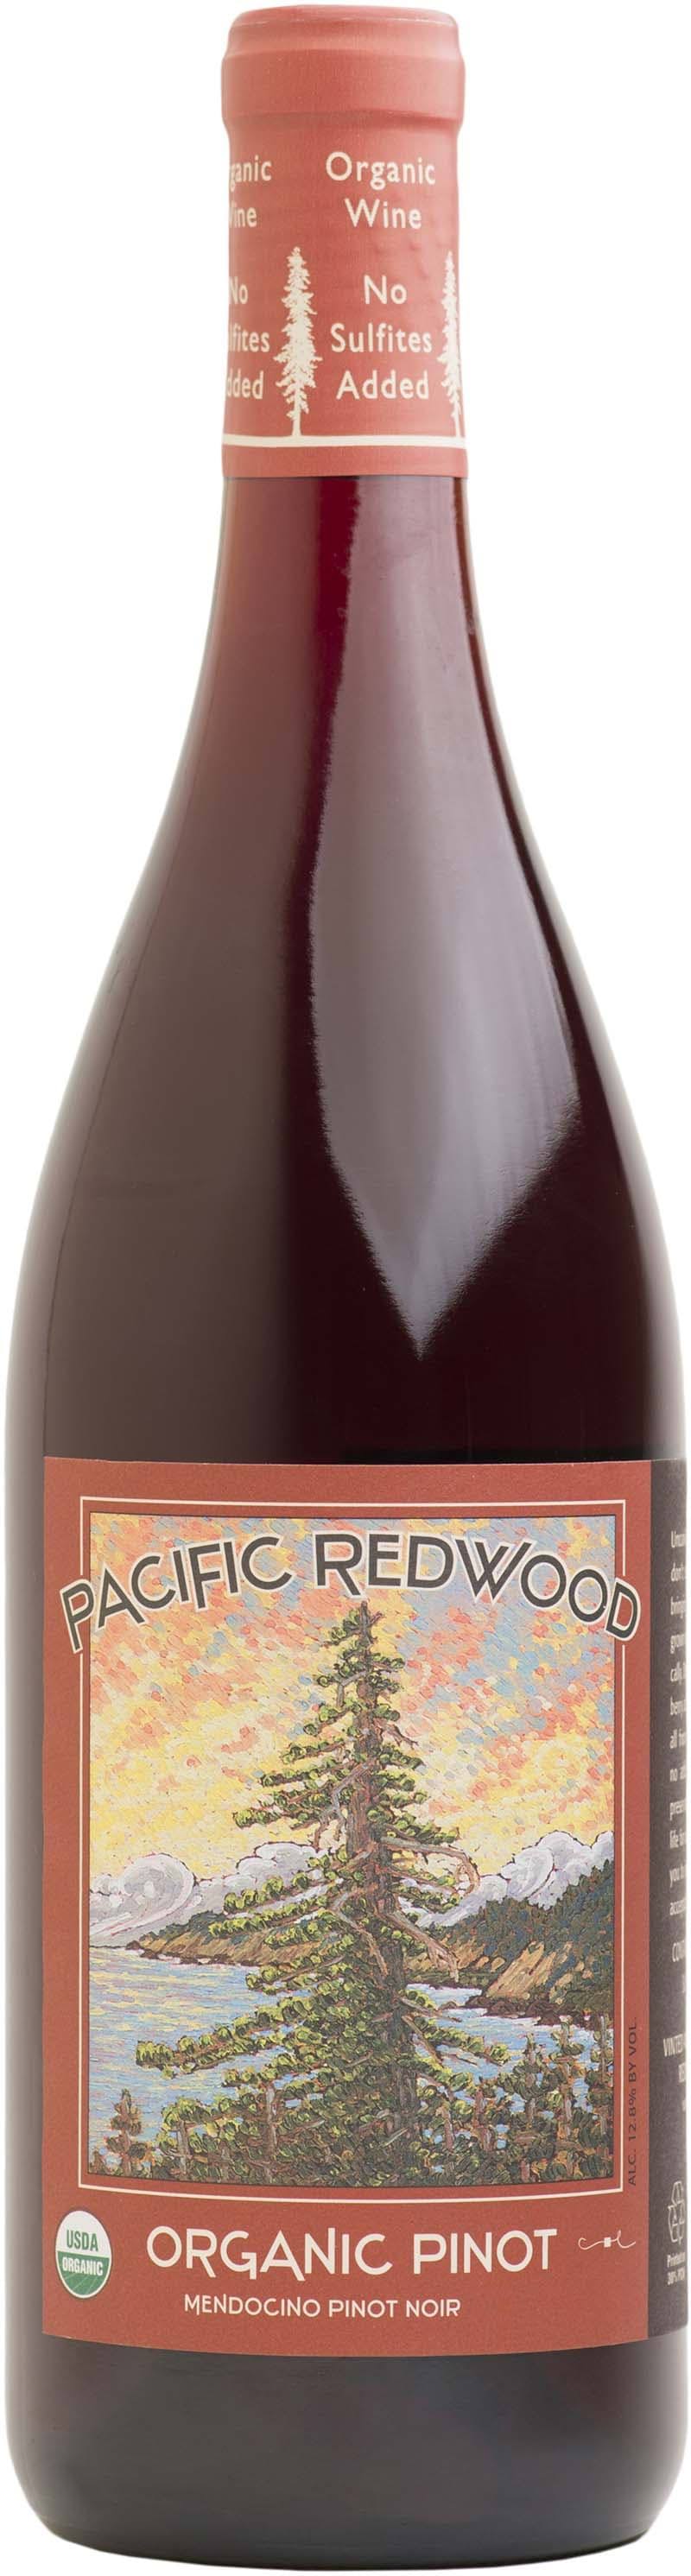 Pacific Redwood Organic Pinot Noir, Mendocino (Vintage Varies) - 750 ml bottle